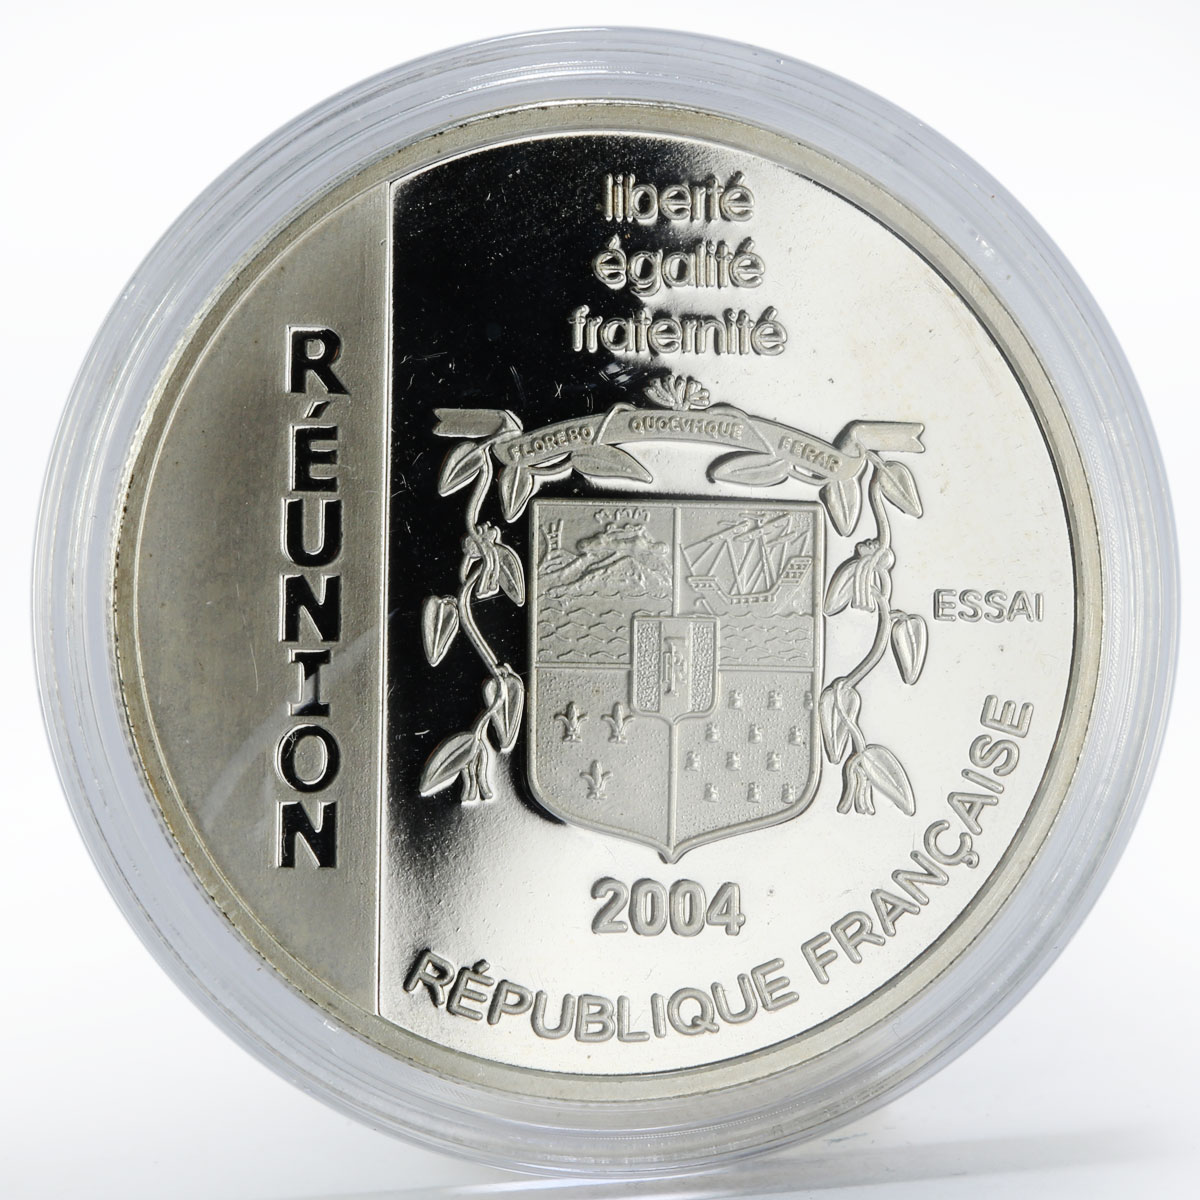 France 1 1/2 euro Porte-Avions Charles De Gaulle Ship silver proof coin 2000